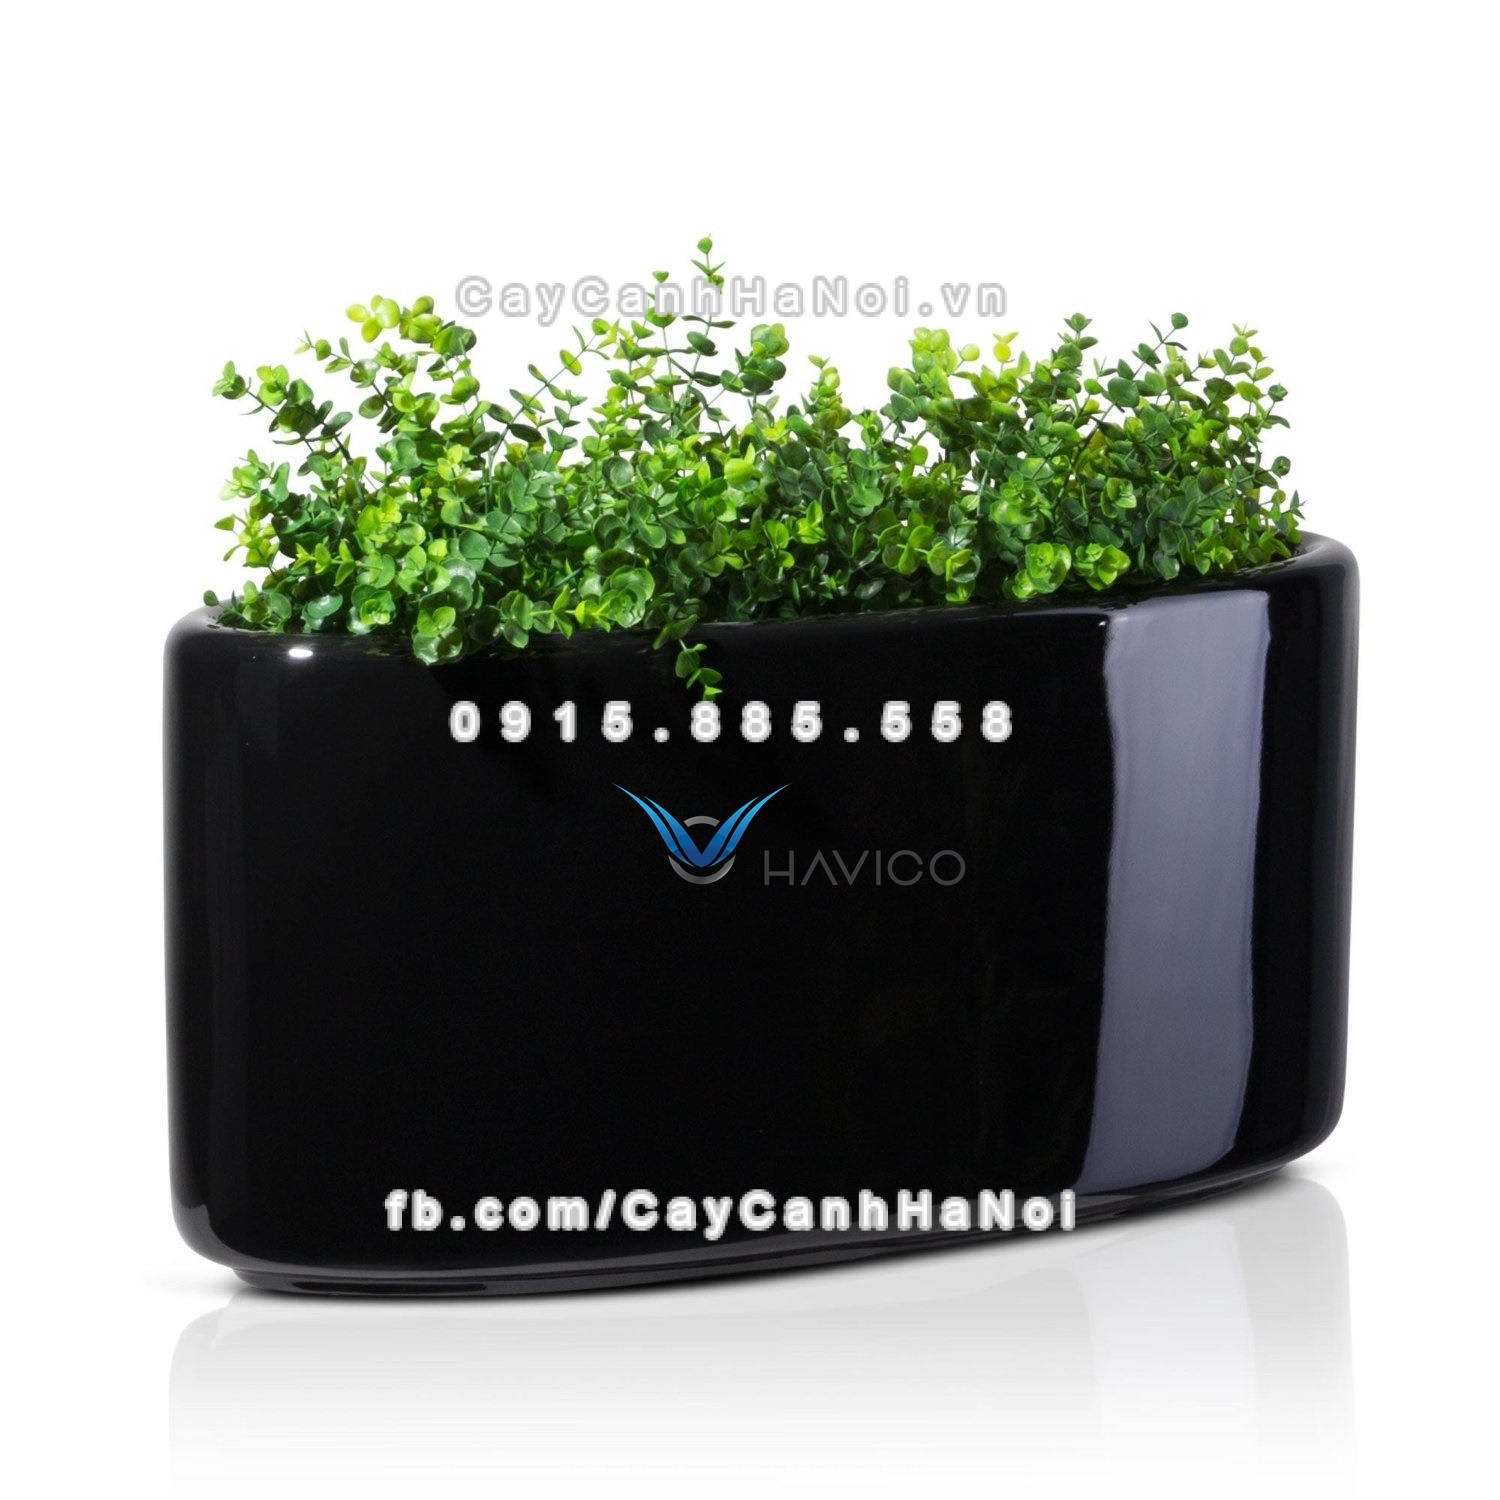 Chậu trồng cây composite Havico Viber| CB-326